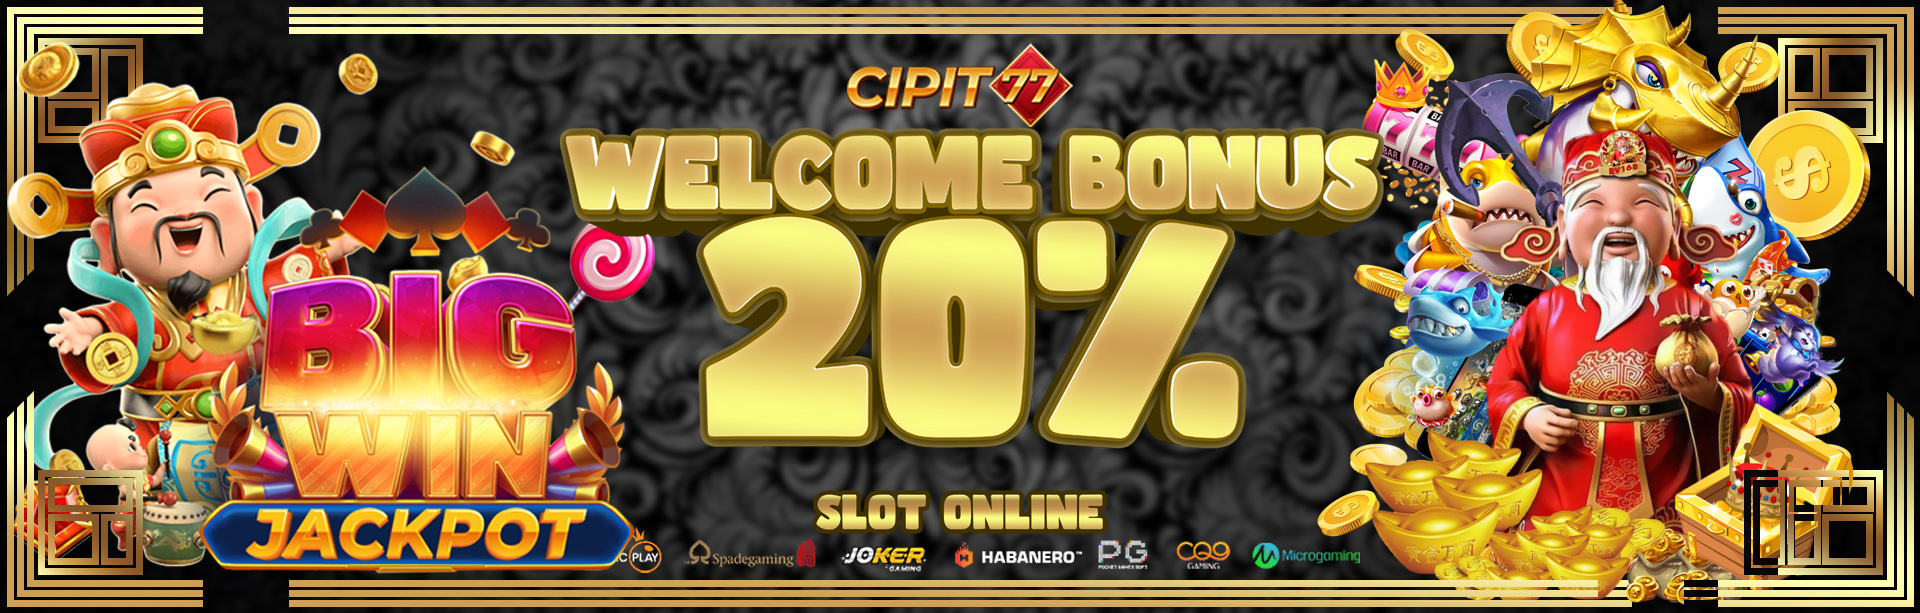 Welcome Bonus 20%